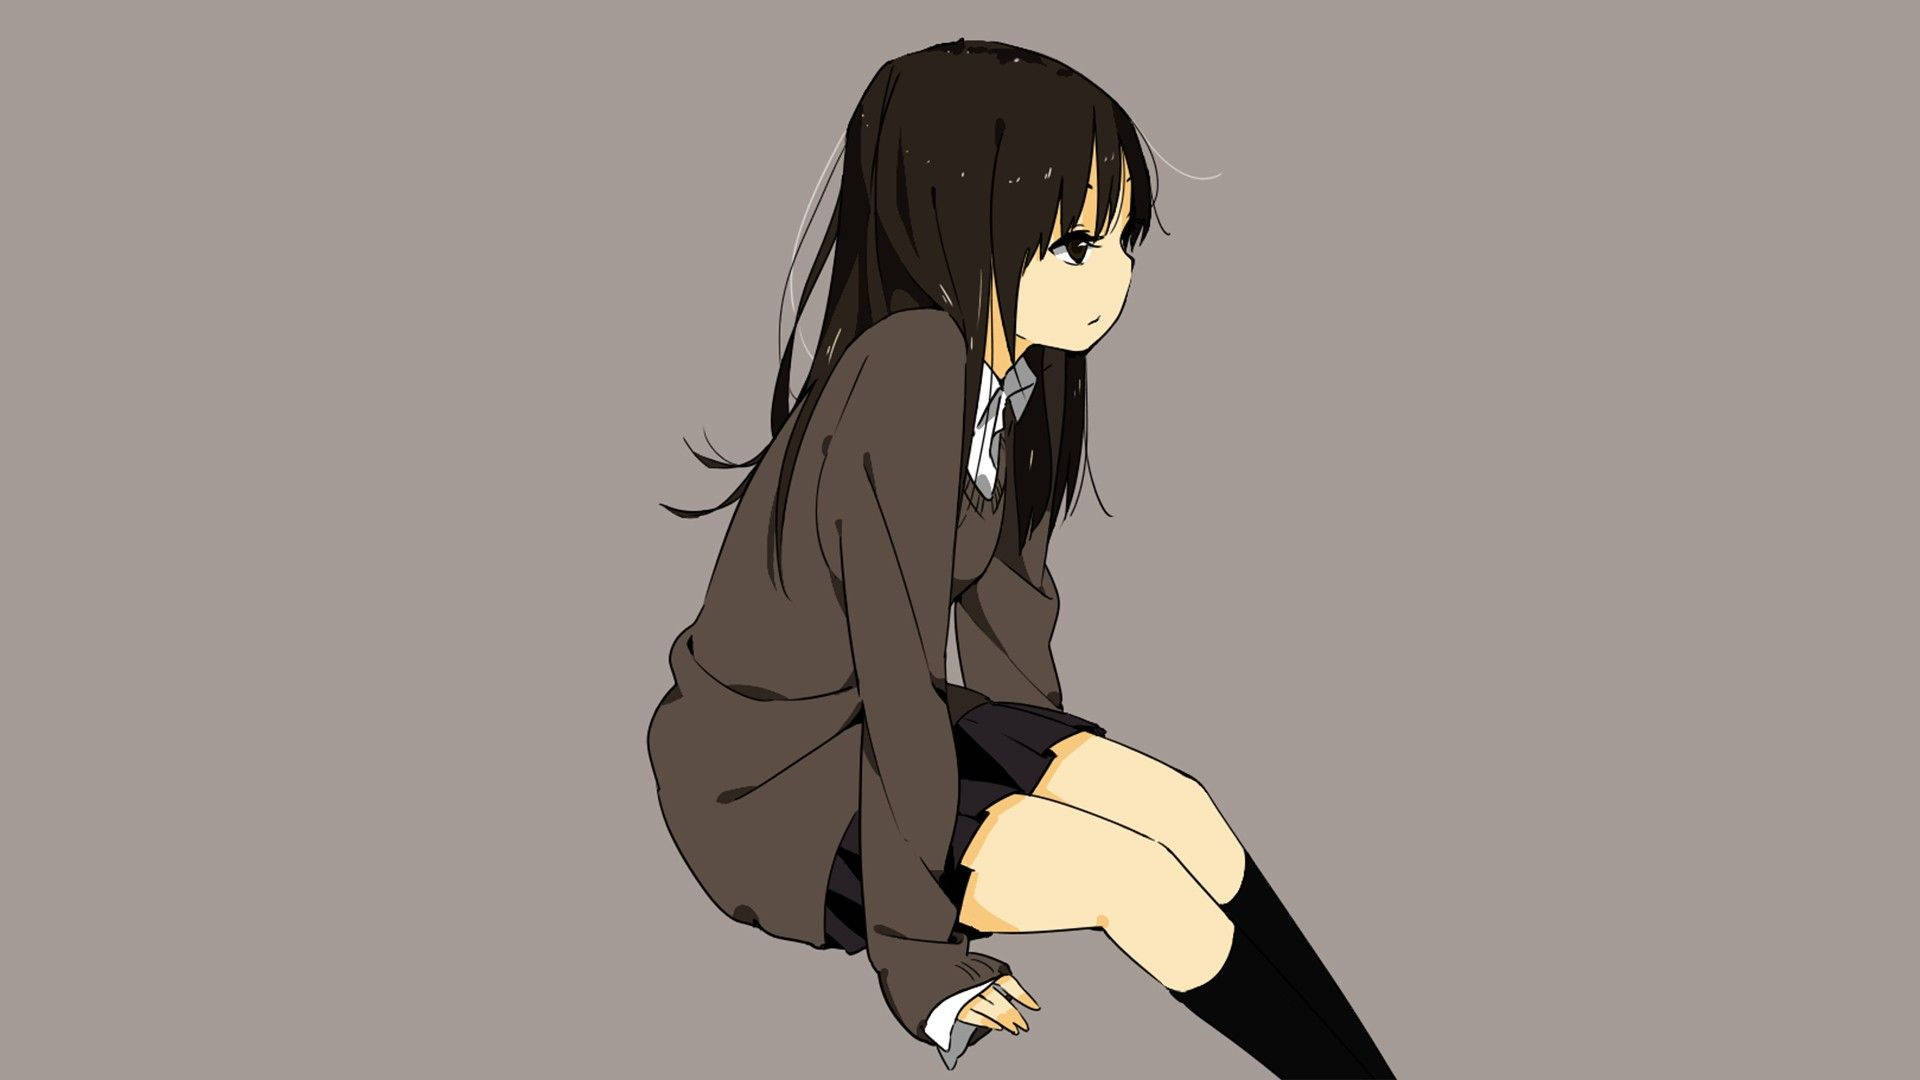 Sad Anime Girl In Uniform Aesthetic Picture